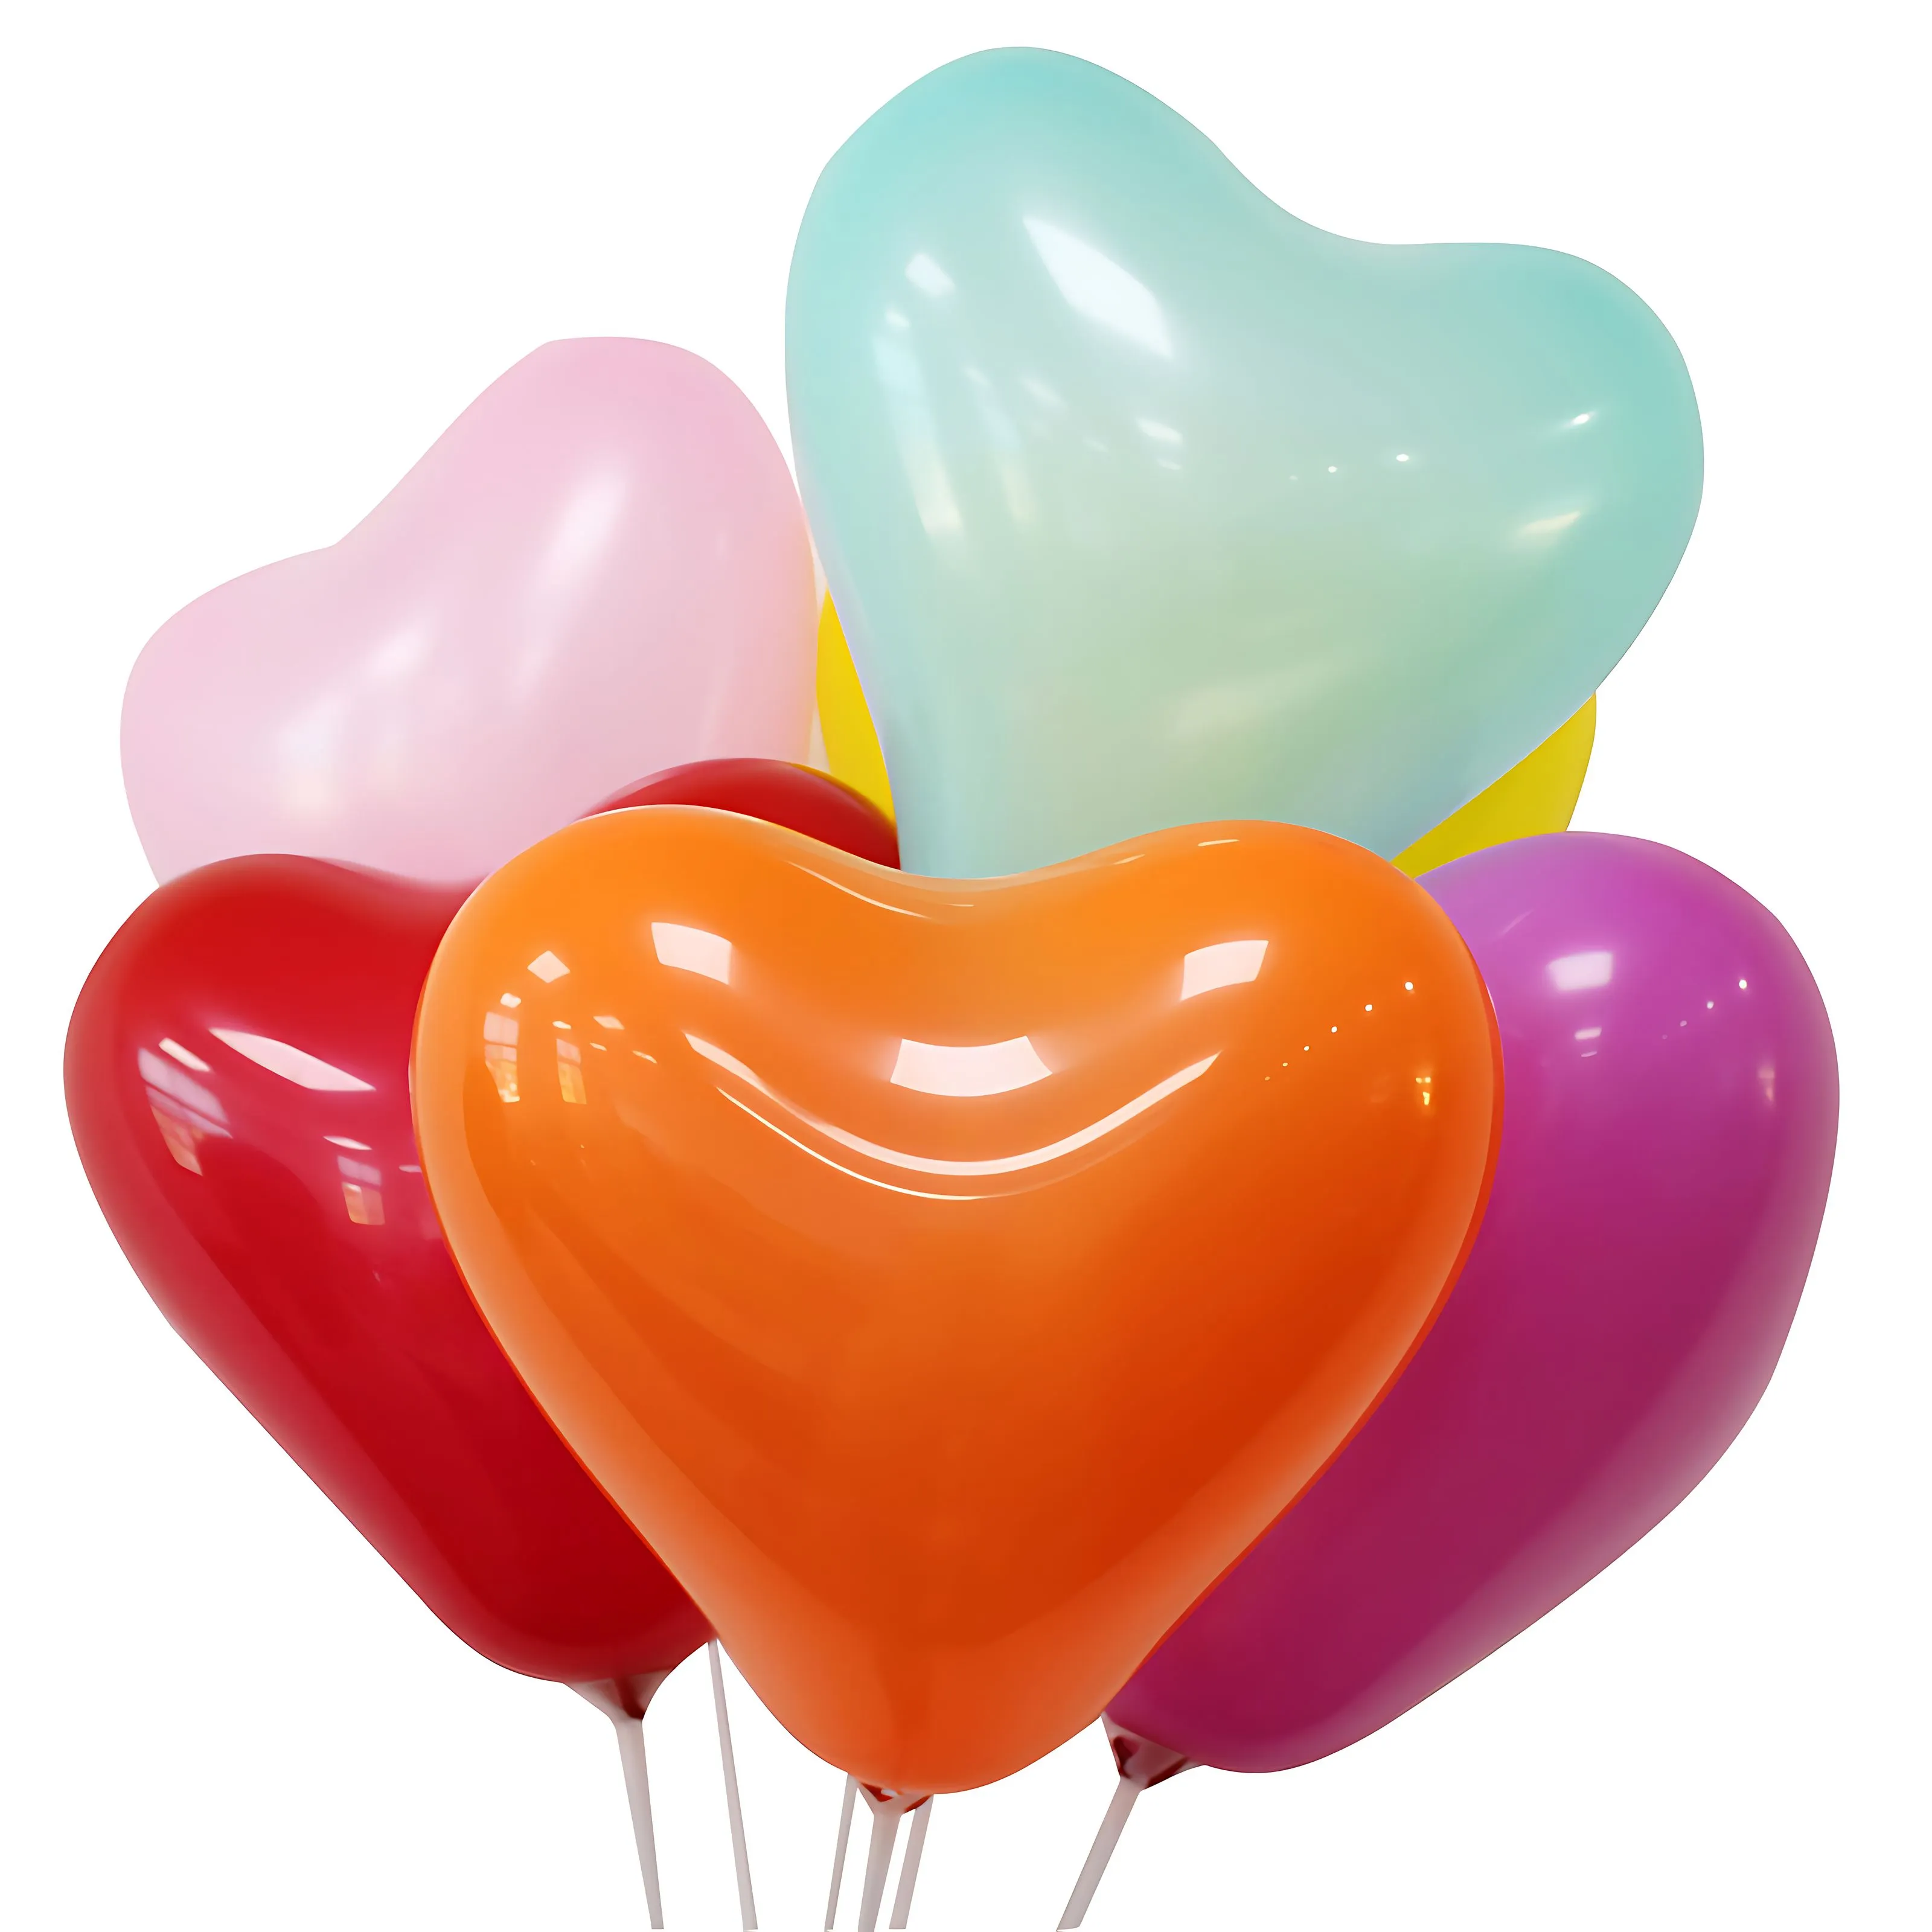 Luckybalon-balon khusus pemegang balon bawaan balon dioperasikan dengan koin balon hadiah untuk anak laki-laki anak perempuan anak-anak Pria Wanita